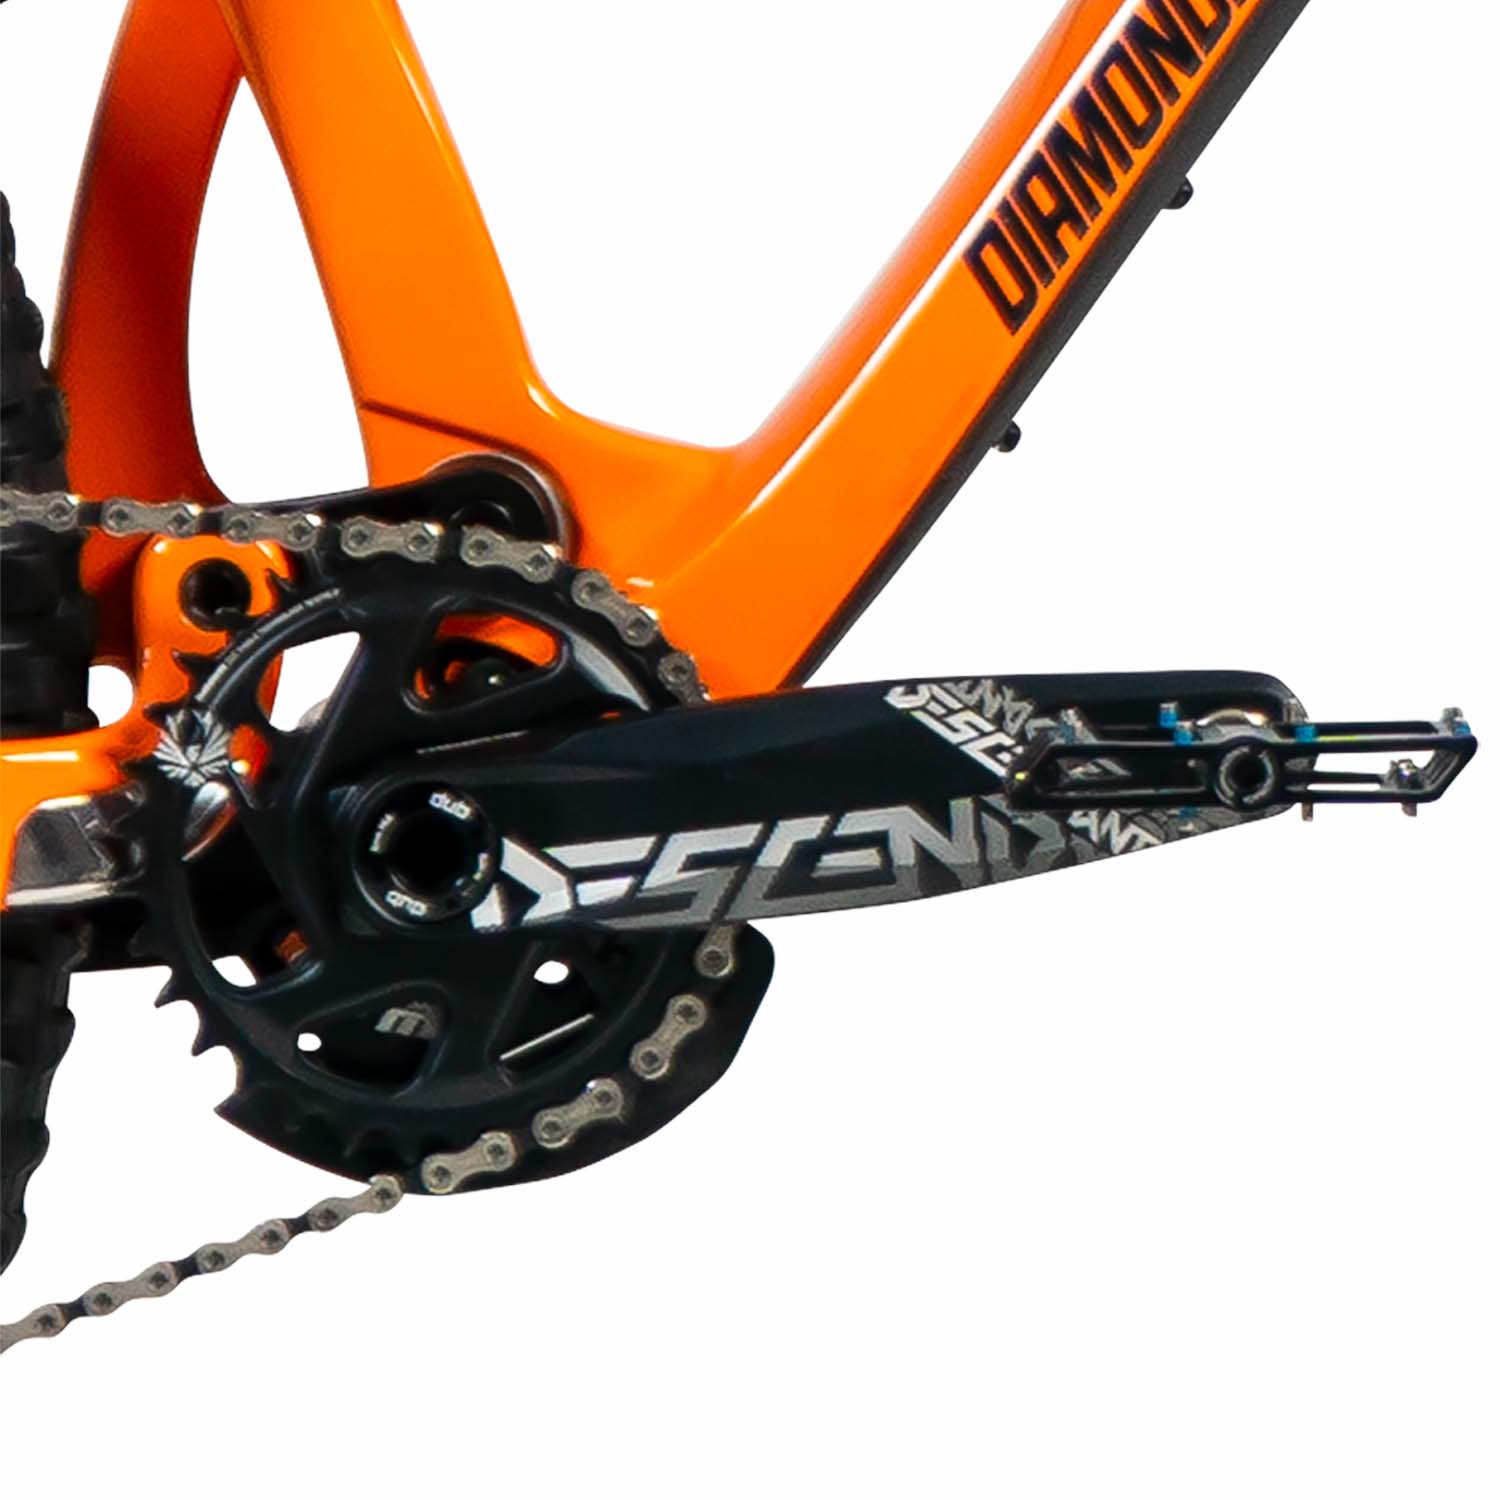 Diamondback Release 5C  Mountain Bike, Orange, BixbyBicycles.com